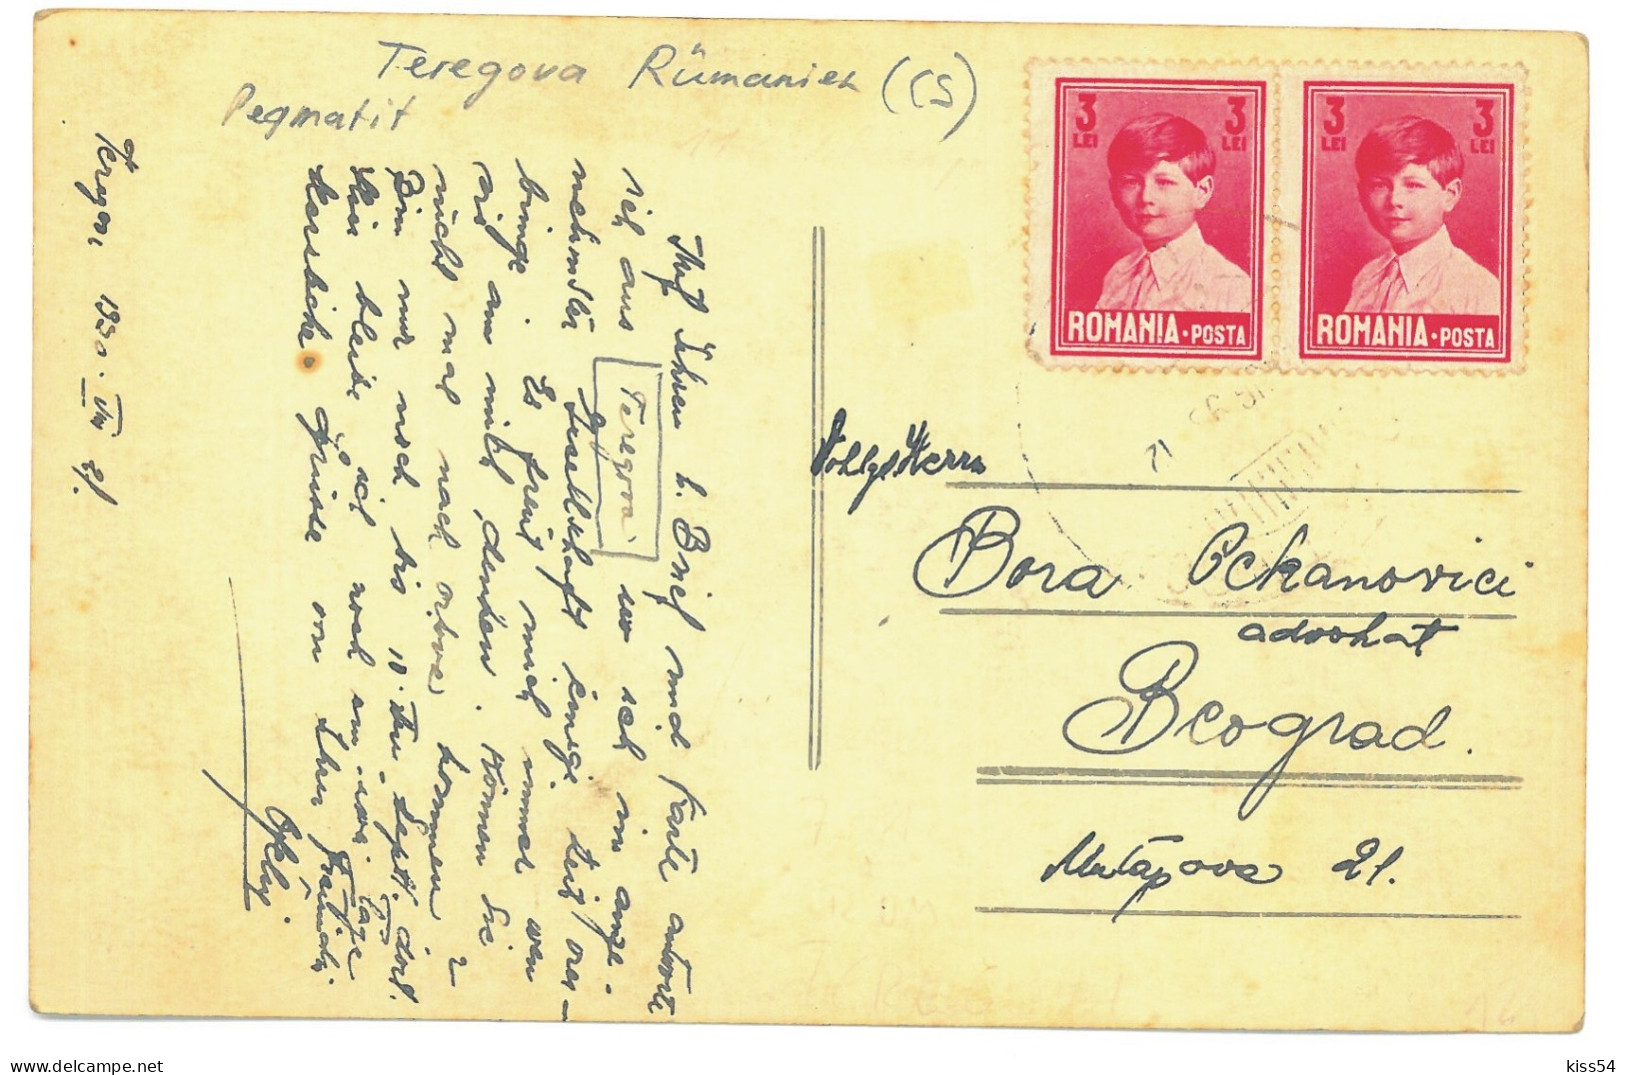 RO 38 - 25019 TEREGOVA, Caras-Severin, Mine Feldspat, Romania - Old Postcard, Real Photo - Used - 1930 - Romania